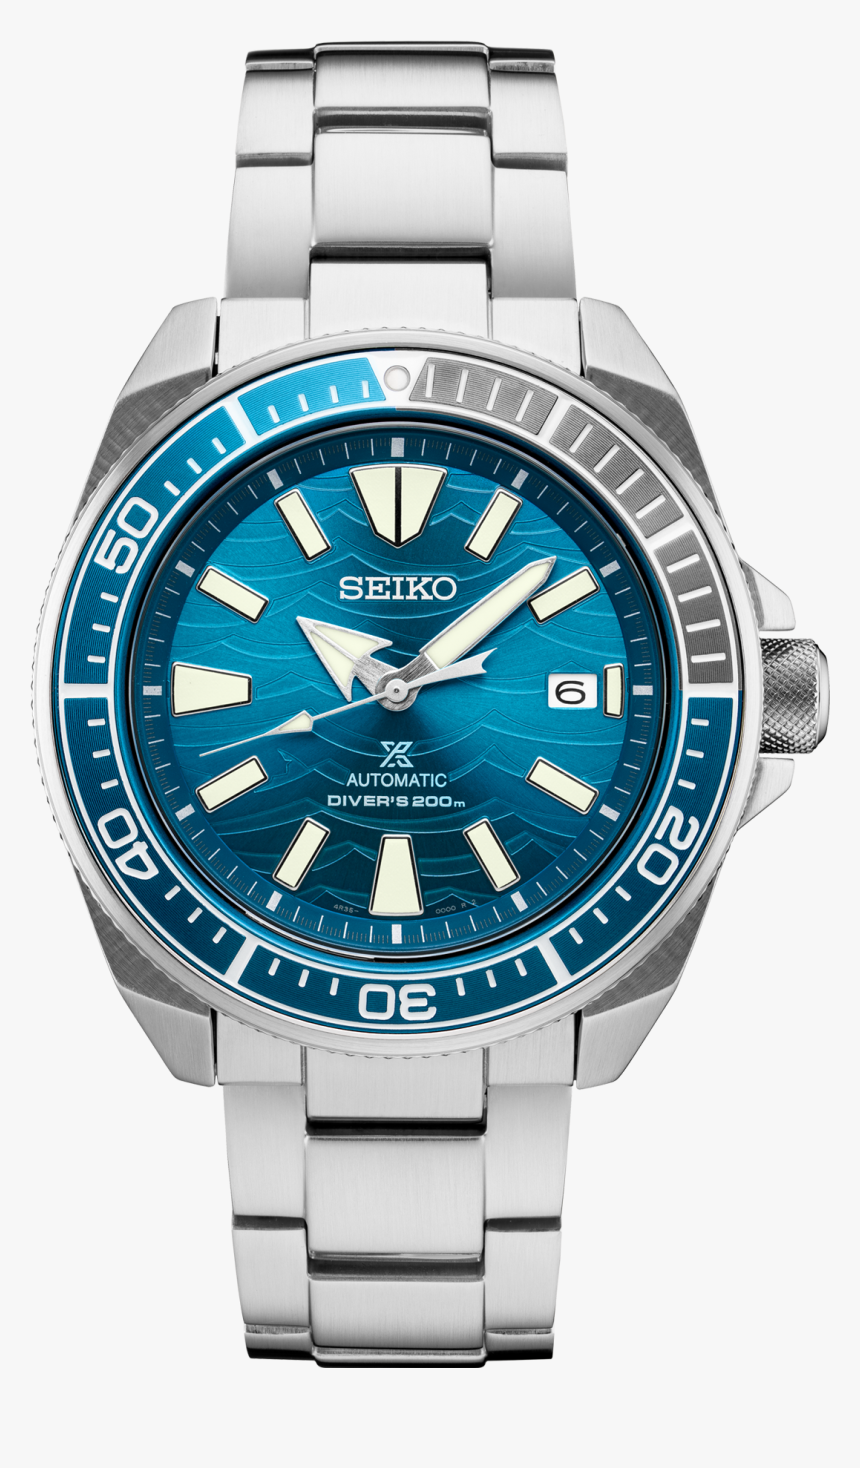 Seiko Men"s Prospex Automatic Divers Watch - Seiko Samurai Save The Ocean, HD Png Download, Free Download